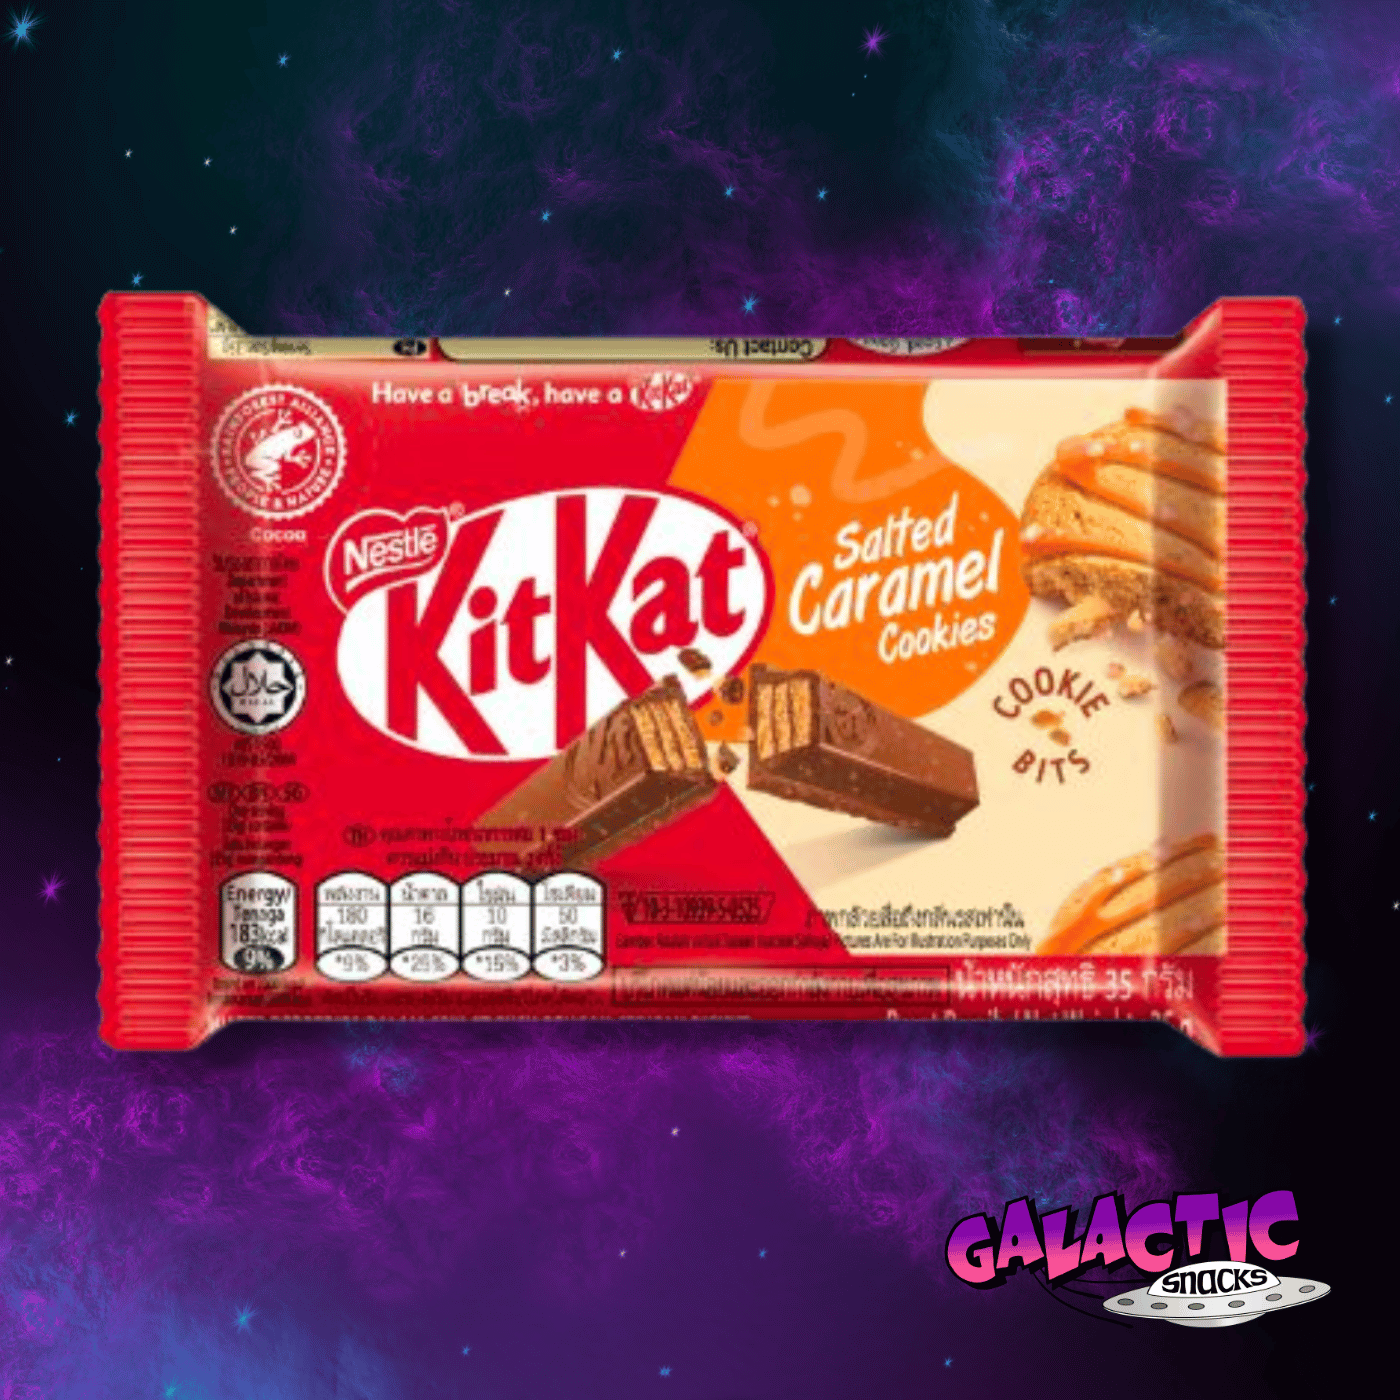 48 x Nestle Kitkat Kit Kat Milk Chocolate Wafer Bars 45g Each Free Shipping